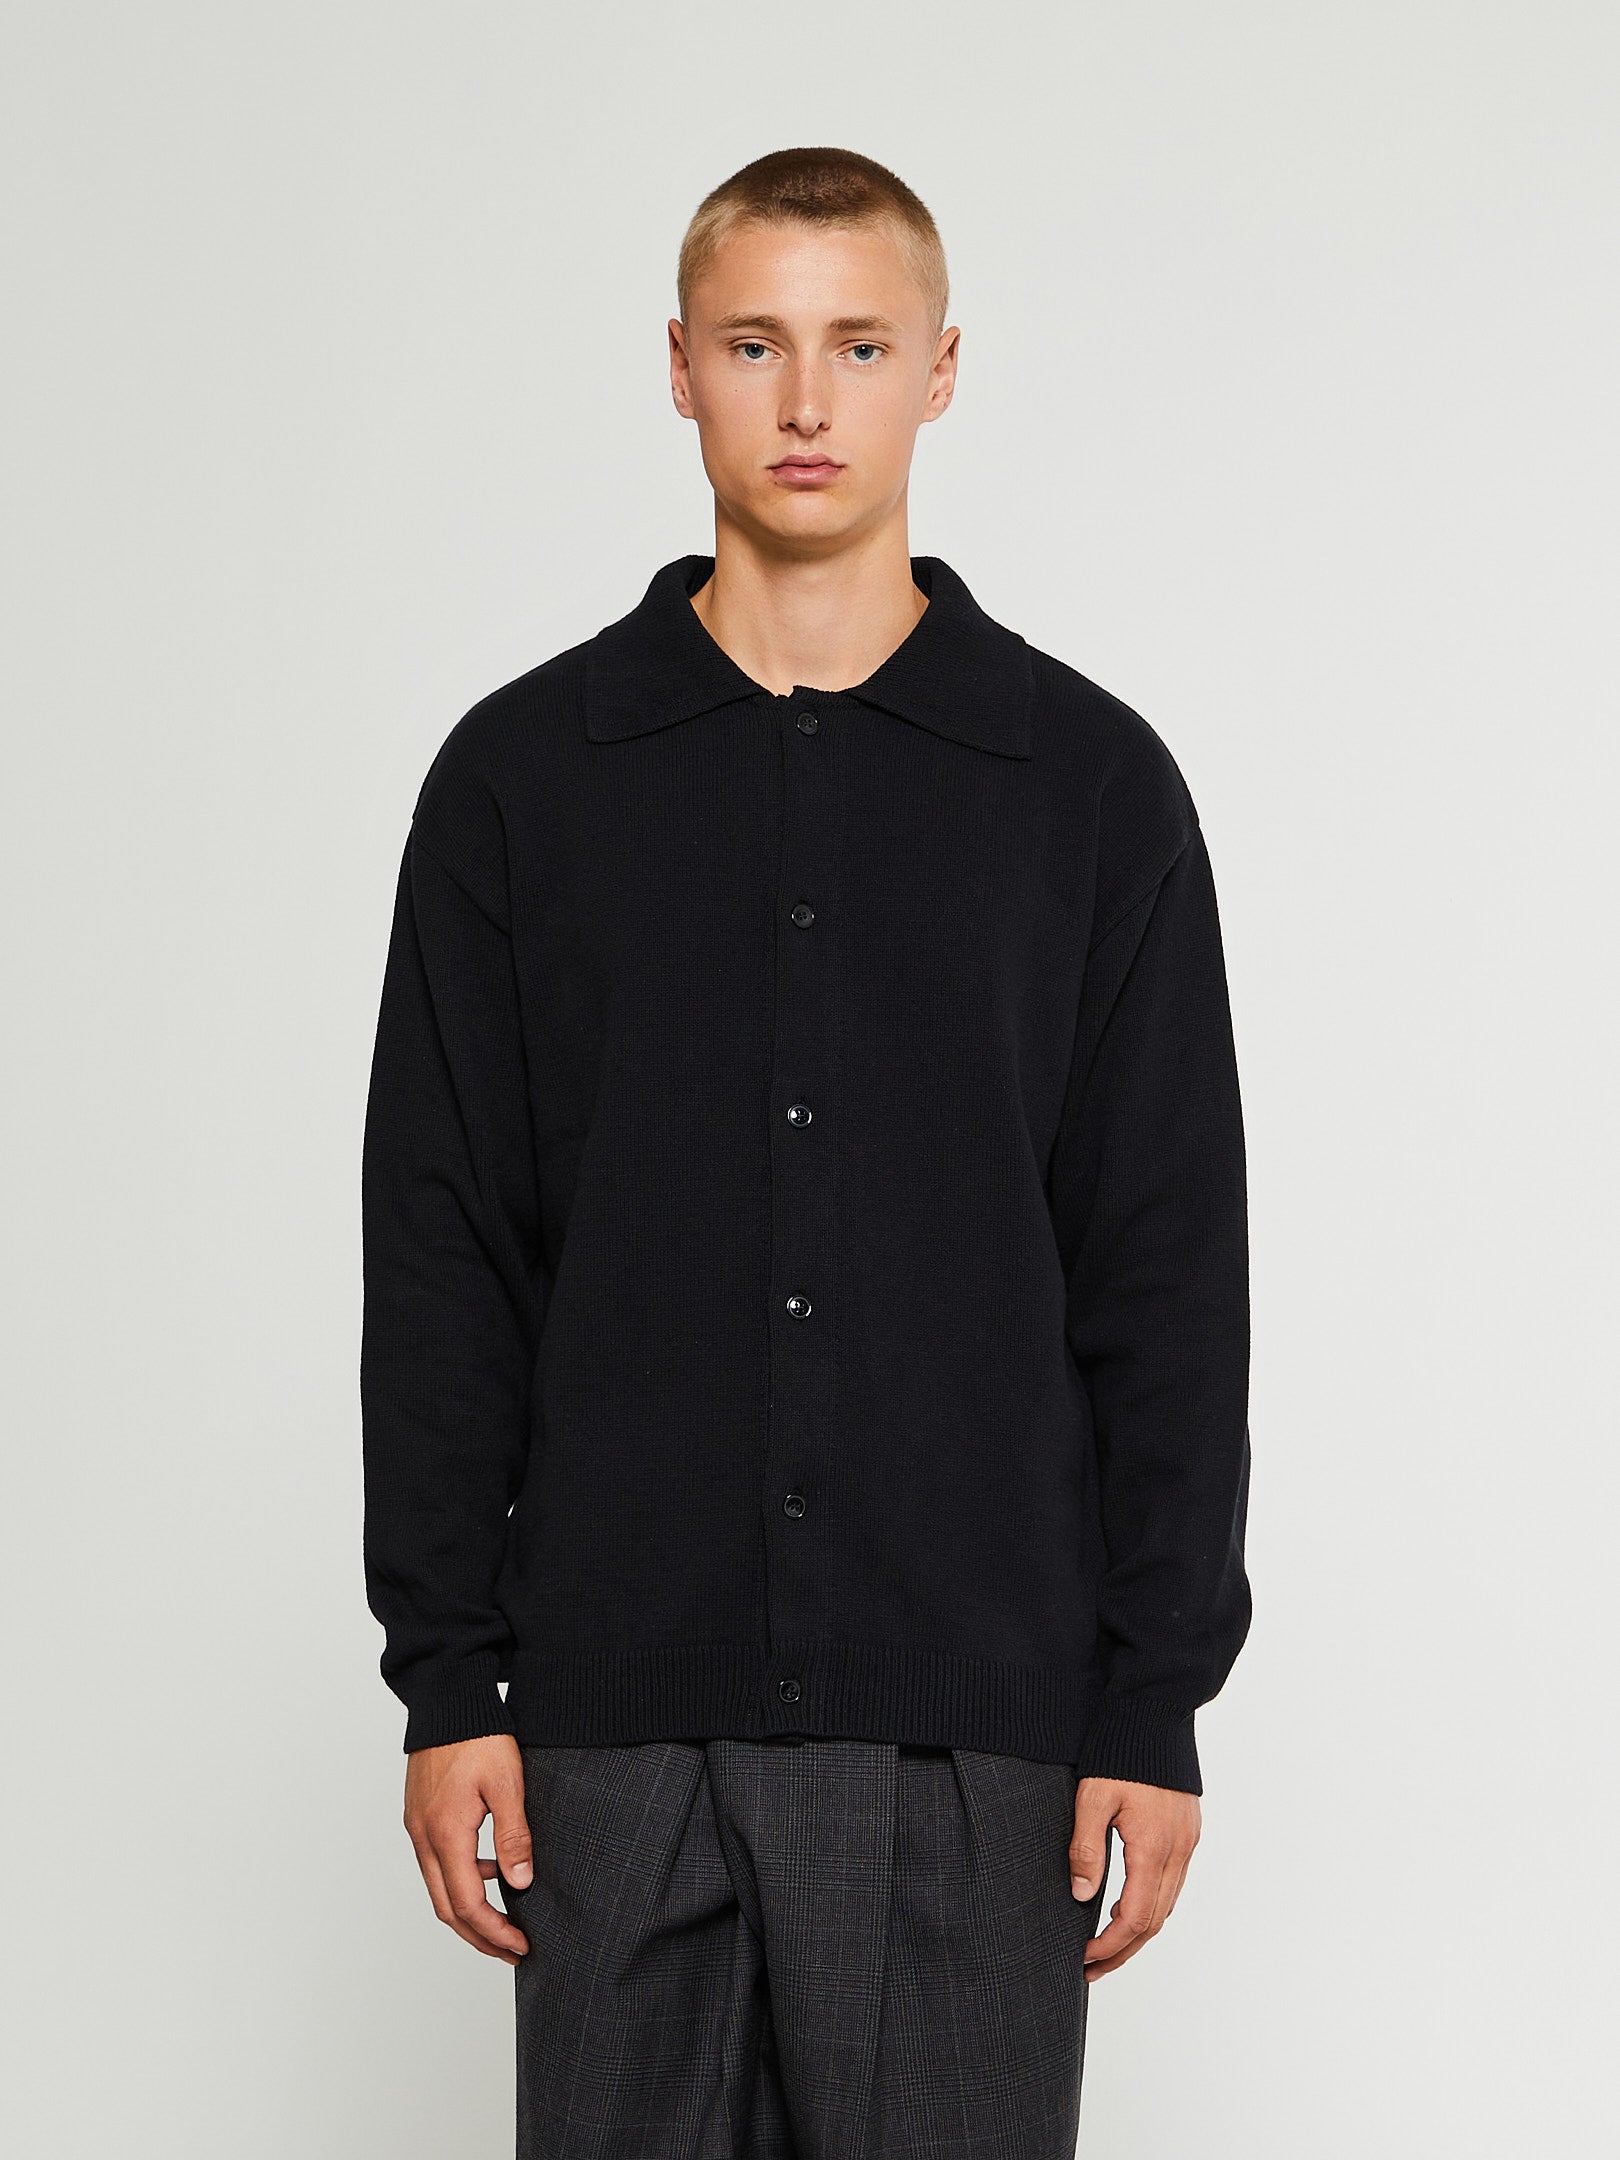 mfpen - Formal Polo Shirt in Black